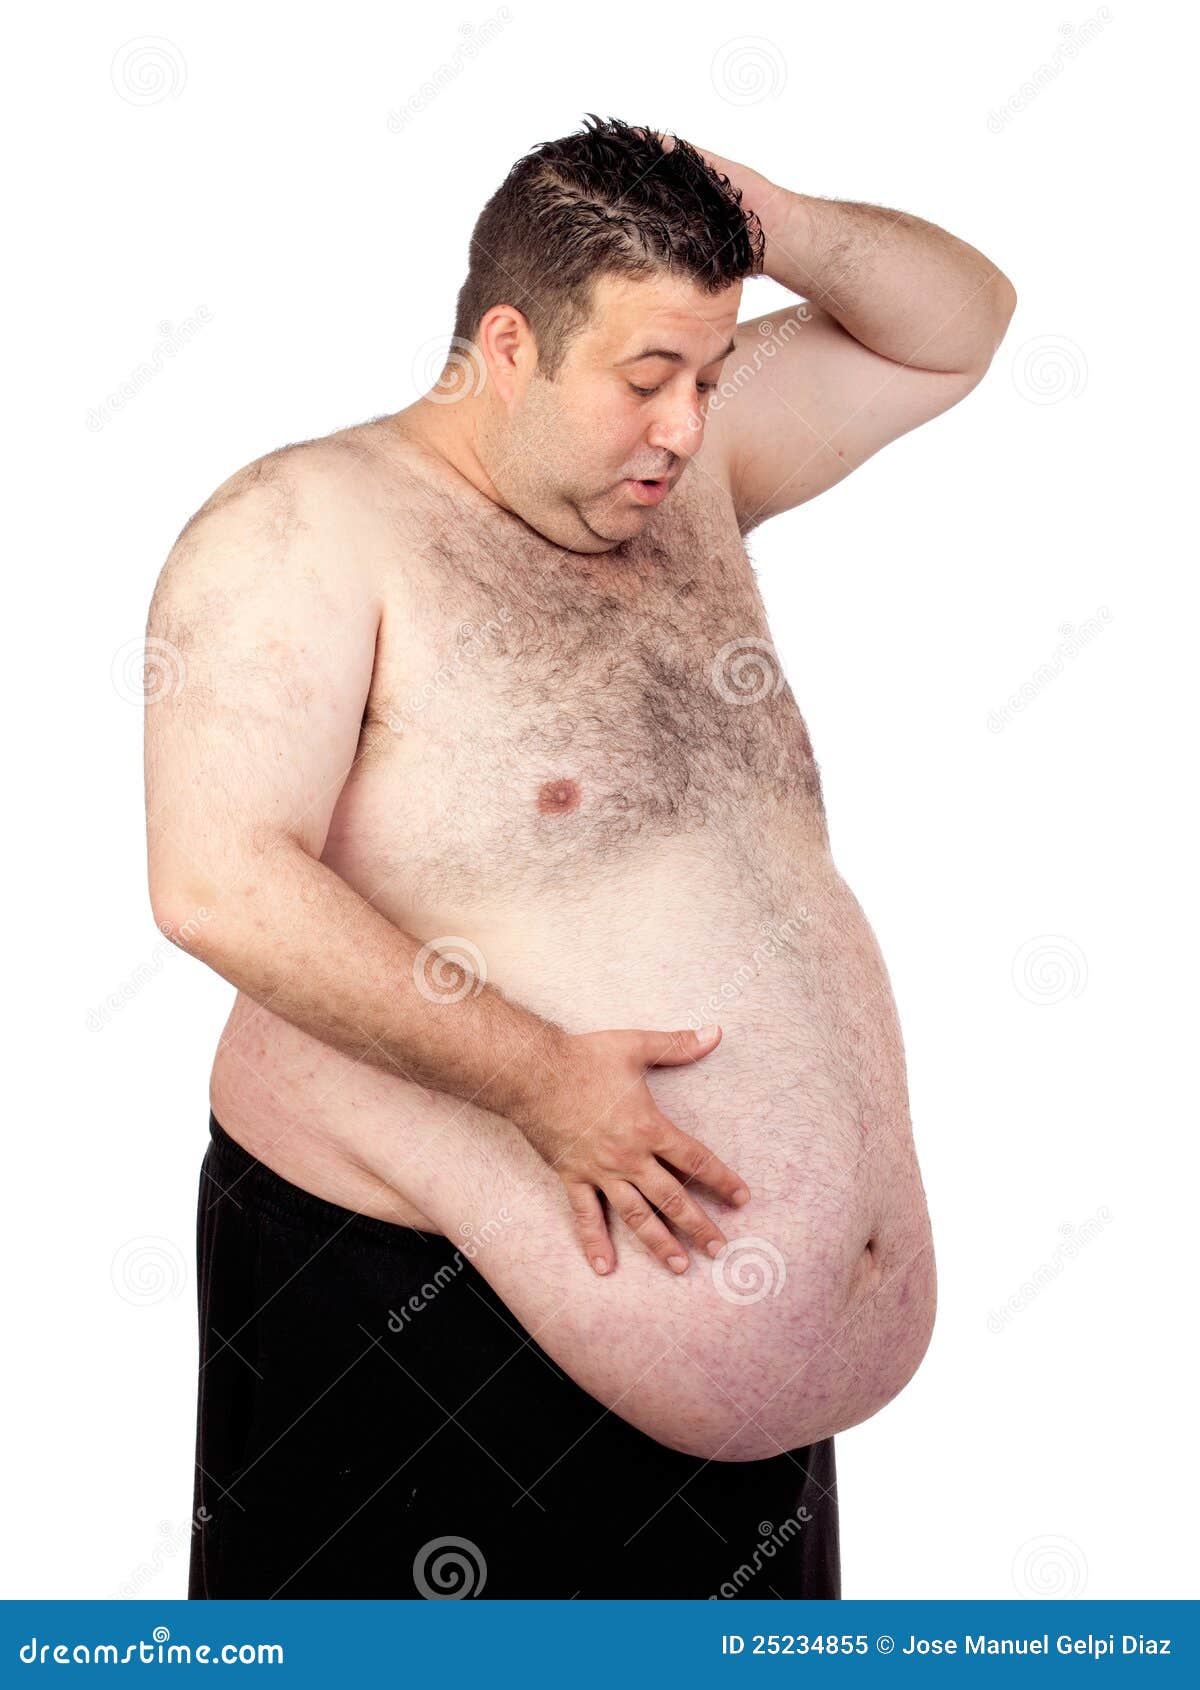 Fat Man Image 117